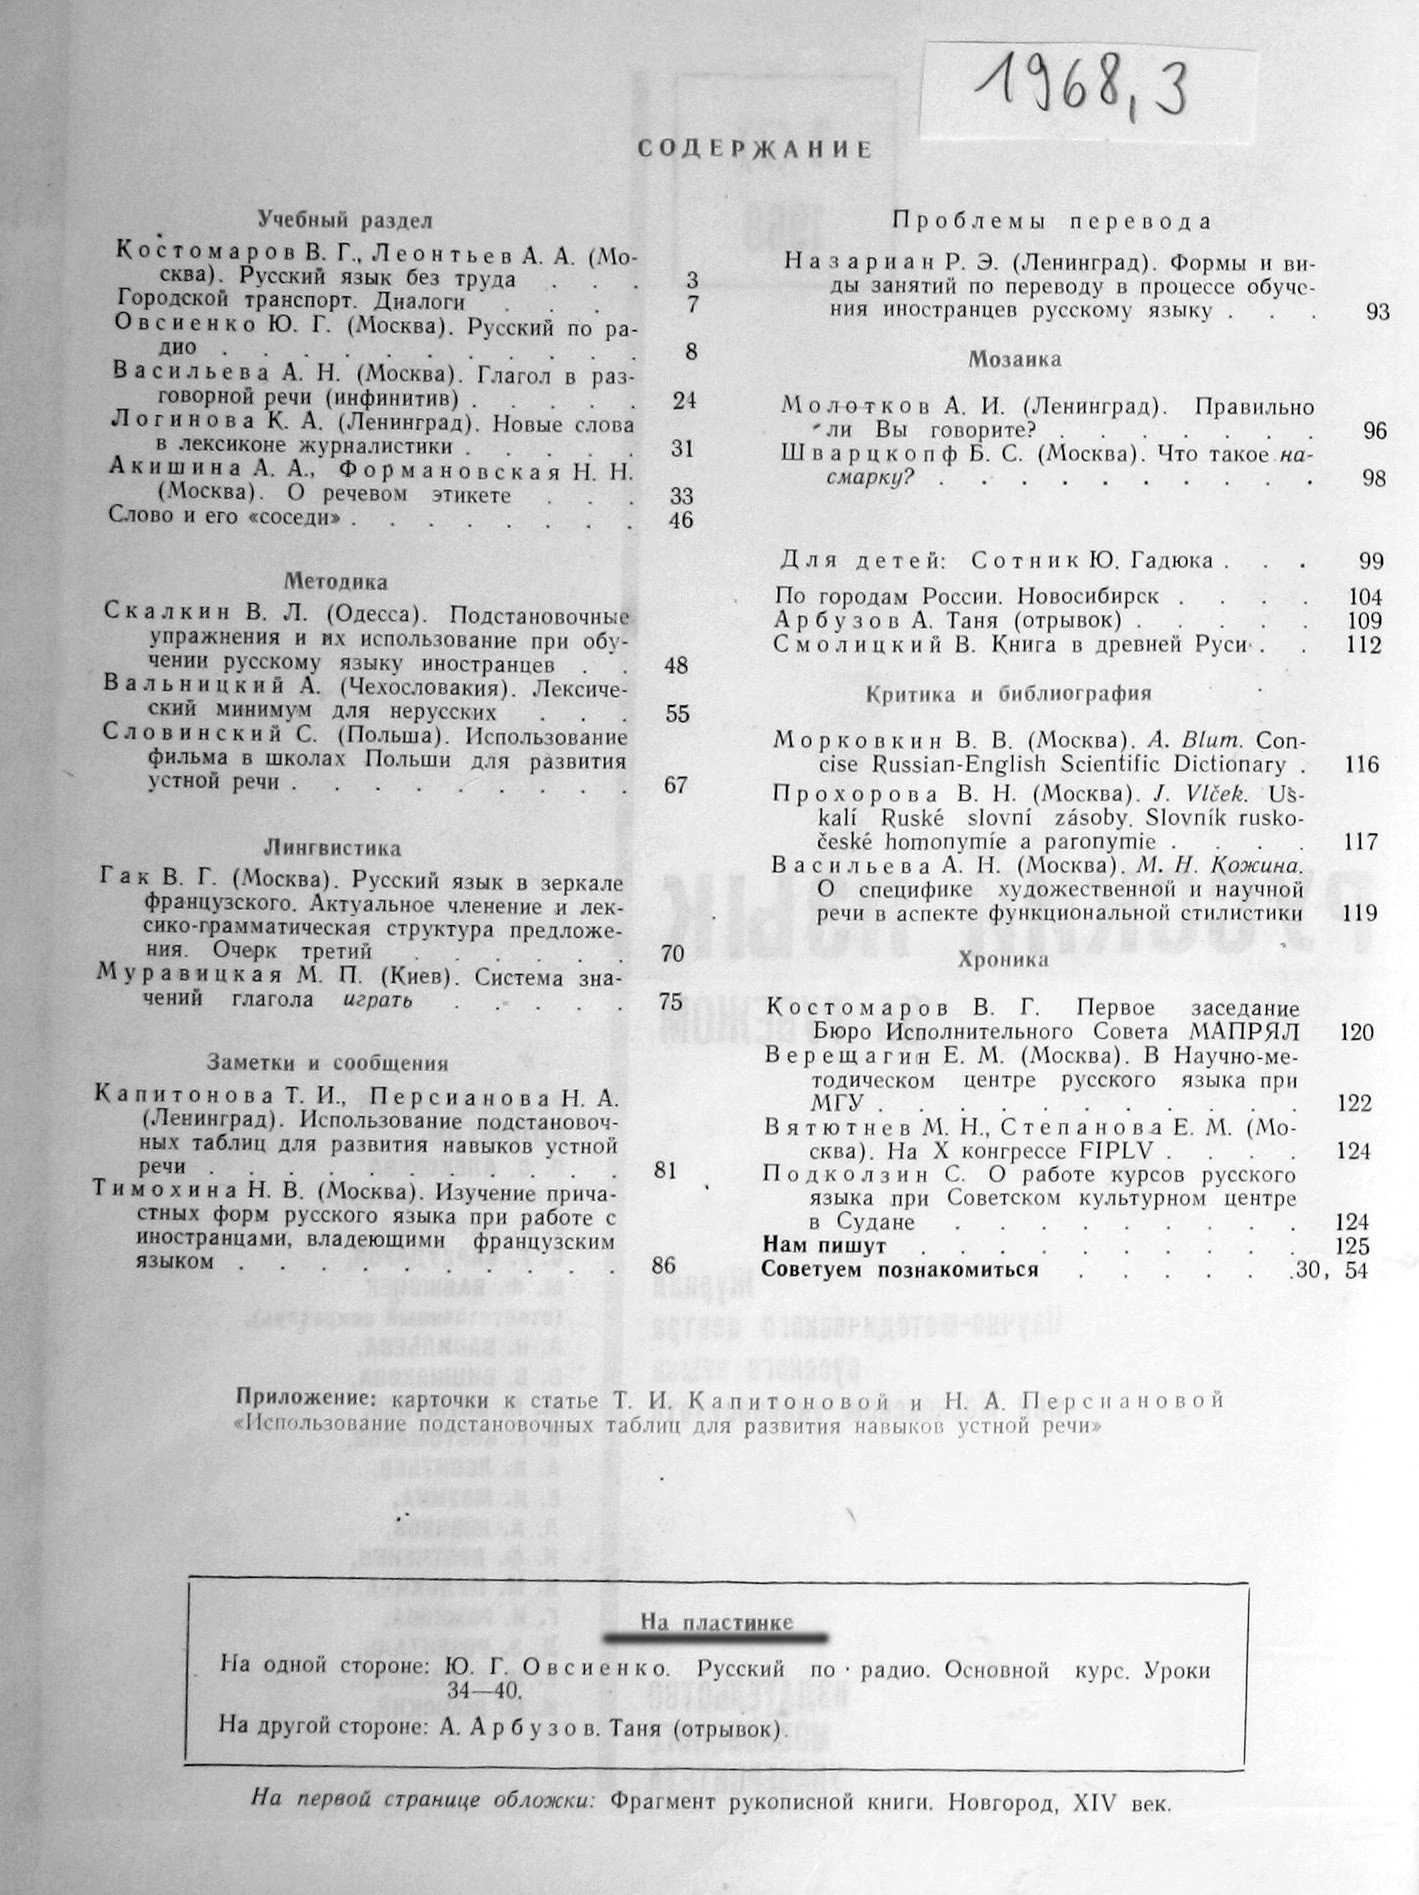 "РУССКИЙ ЯЗЫК ЗА РУБЕЖОМ", № 3 - 1968